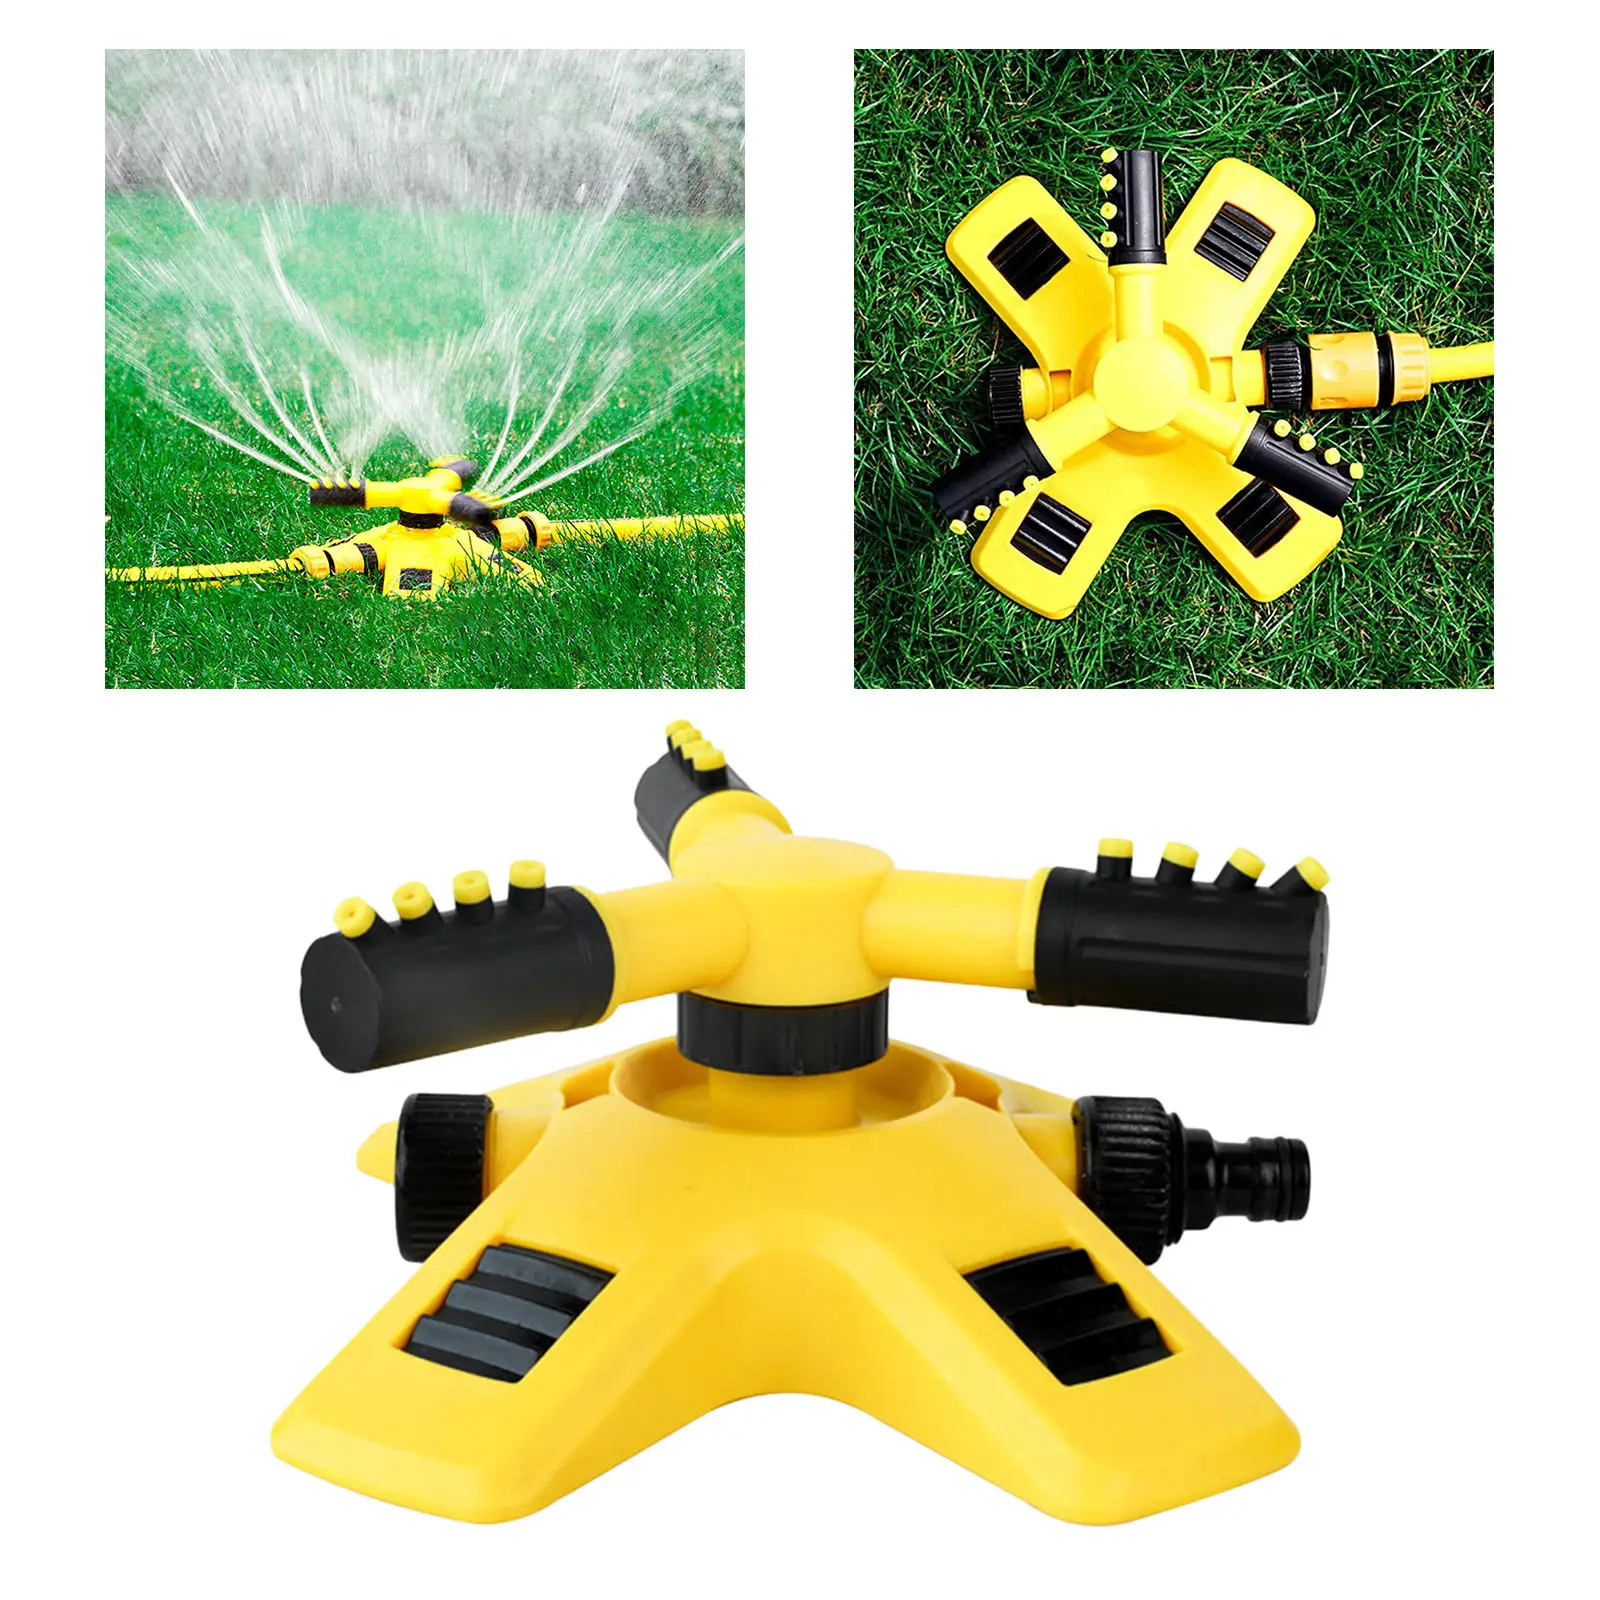 Lawn Sprinkler 3-Arm Oscillating Garden Grass Watering Sprayer Sprinklers